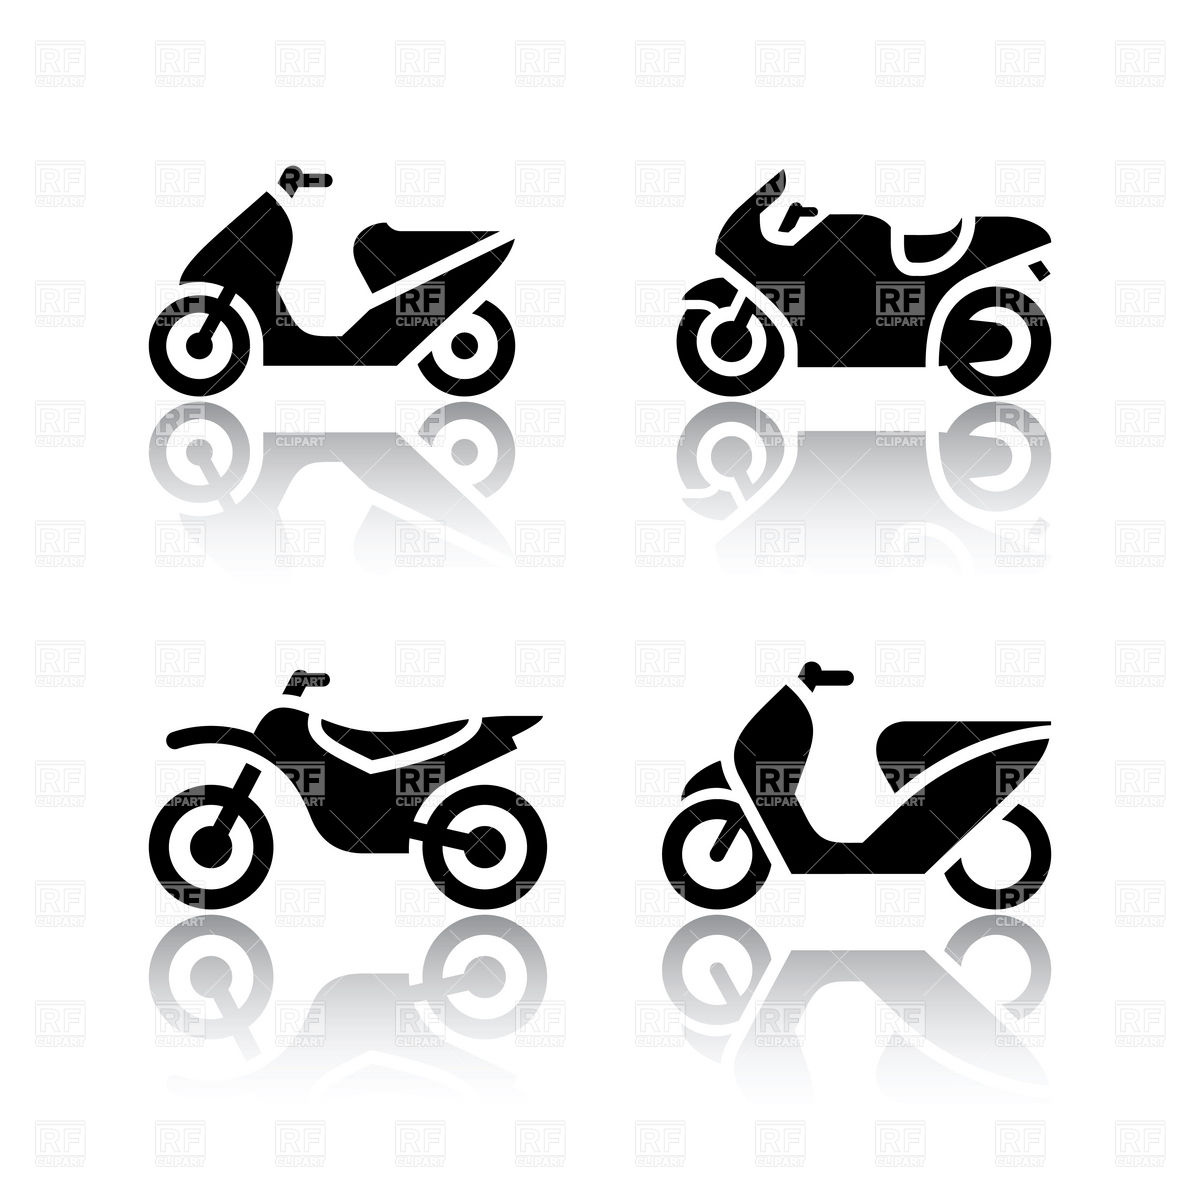 Free Motorcycle Vector Clip Art